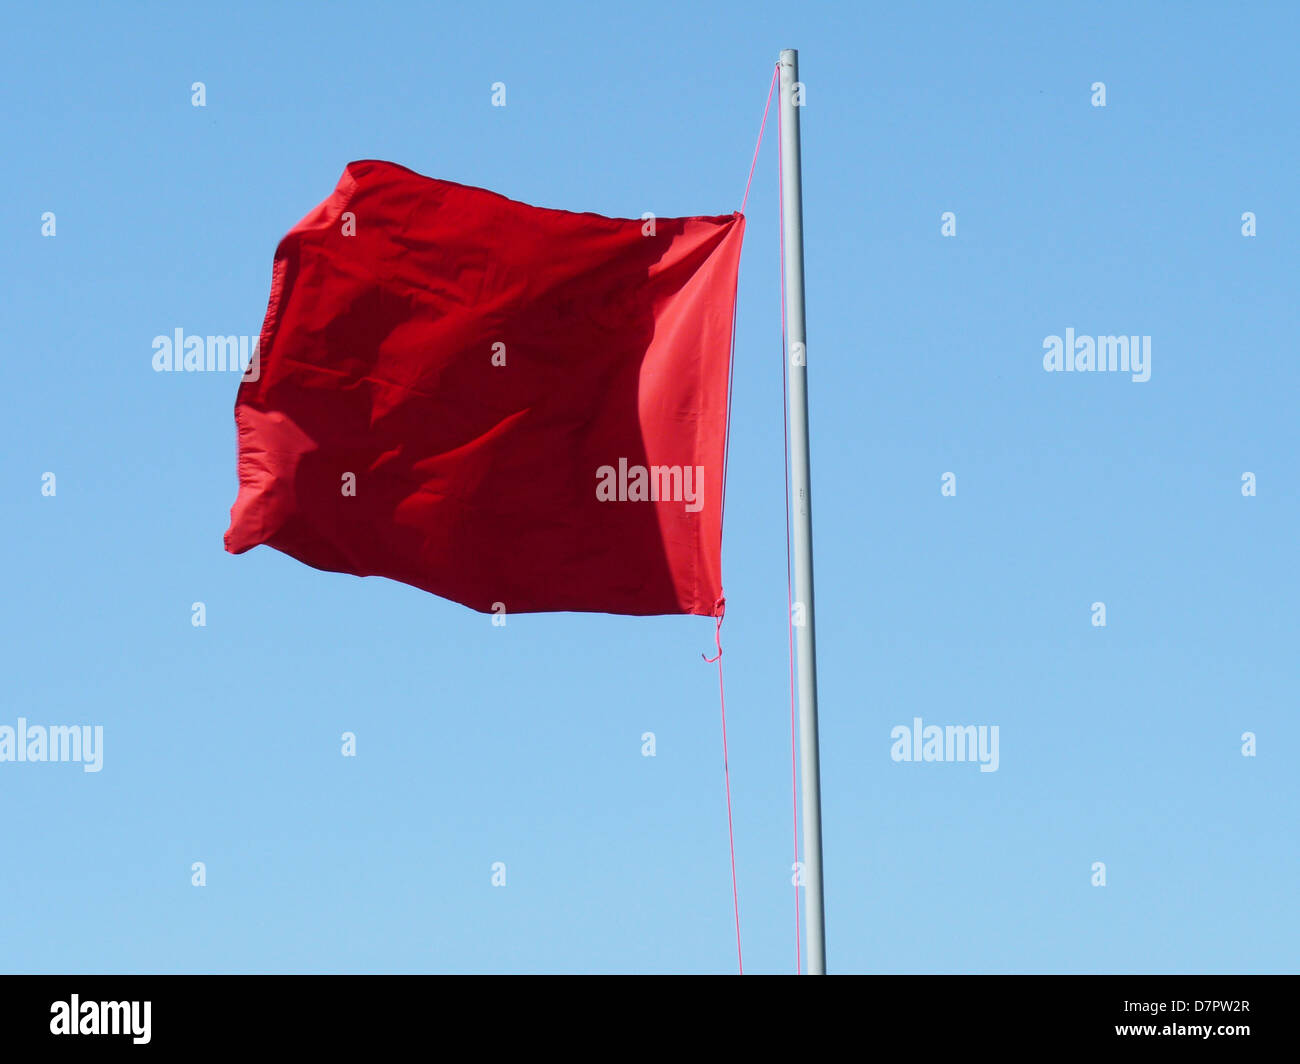 red flag communism totalitarian regime politics banner flag is raised unfreedom staff wind high day holiday blue azure sky crump Stock Photo